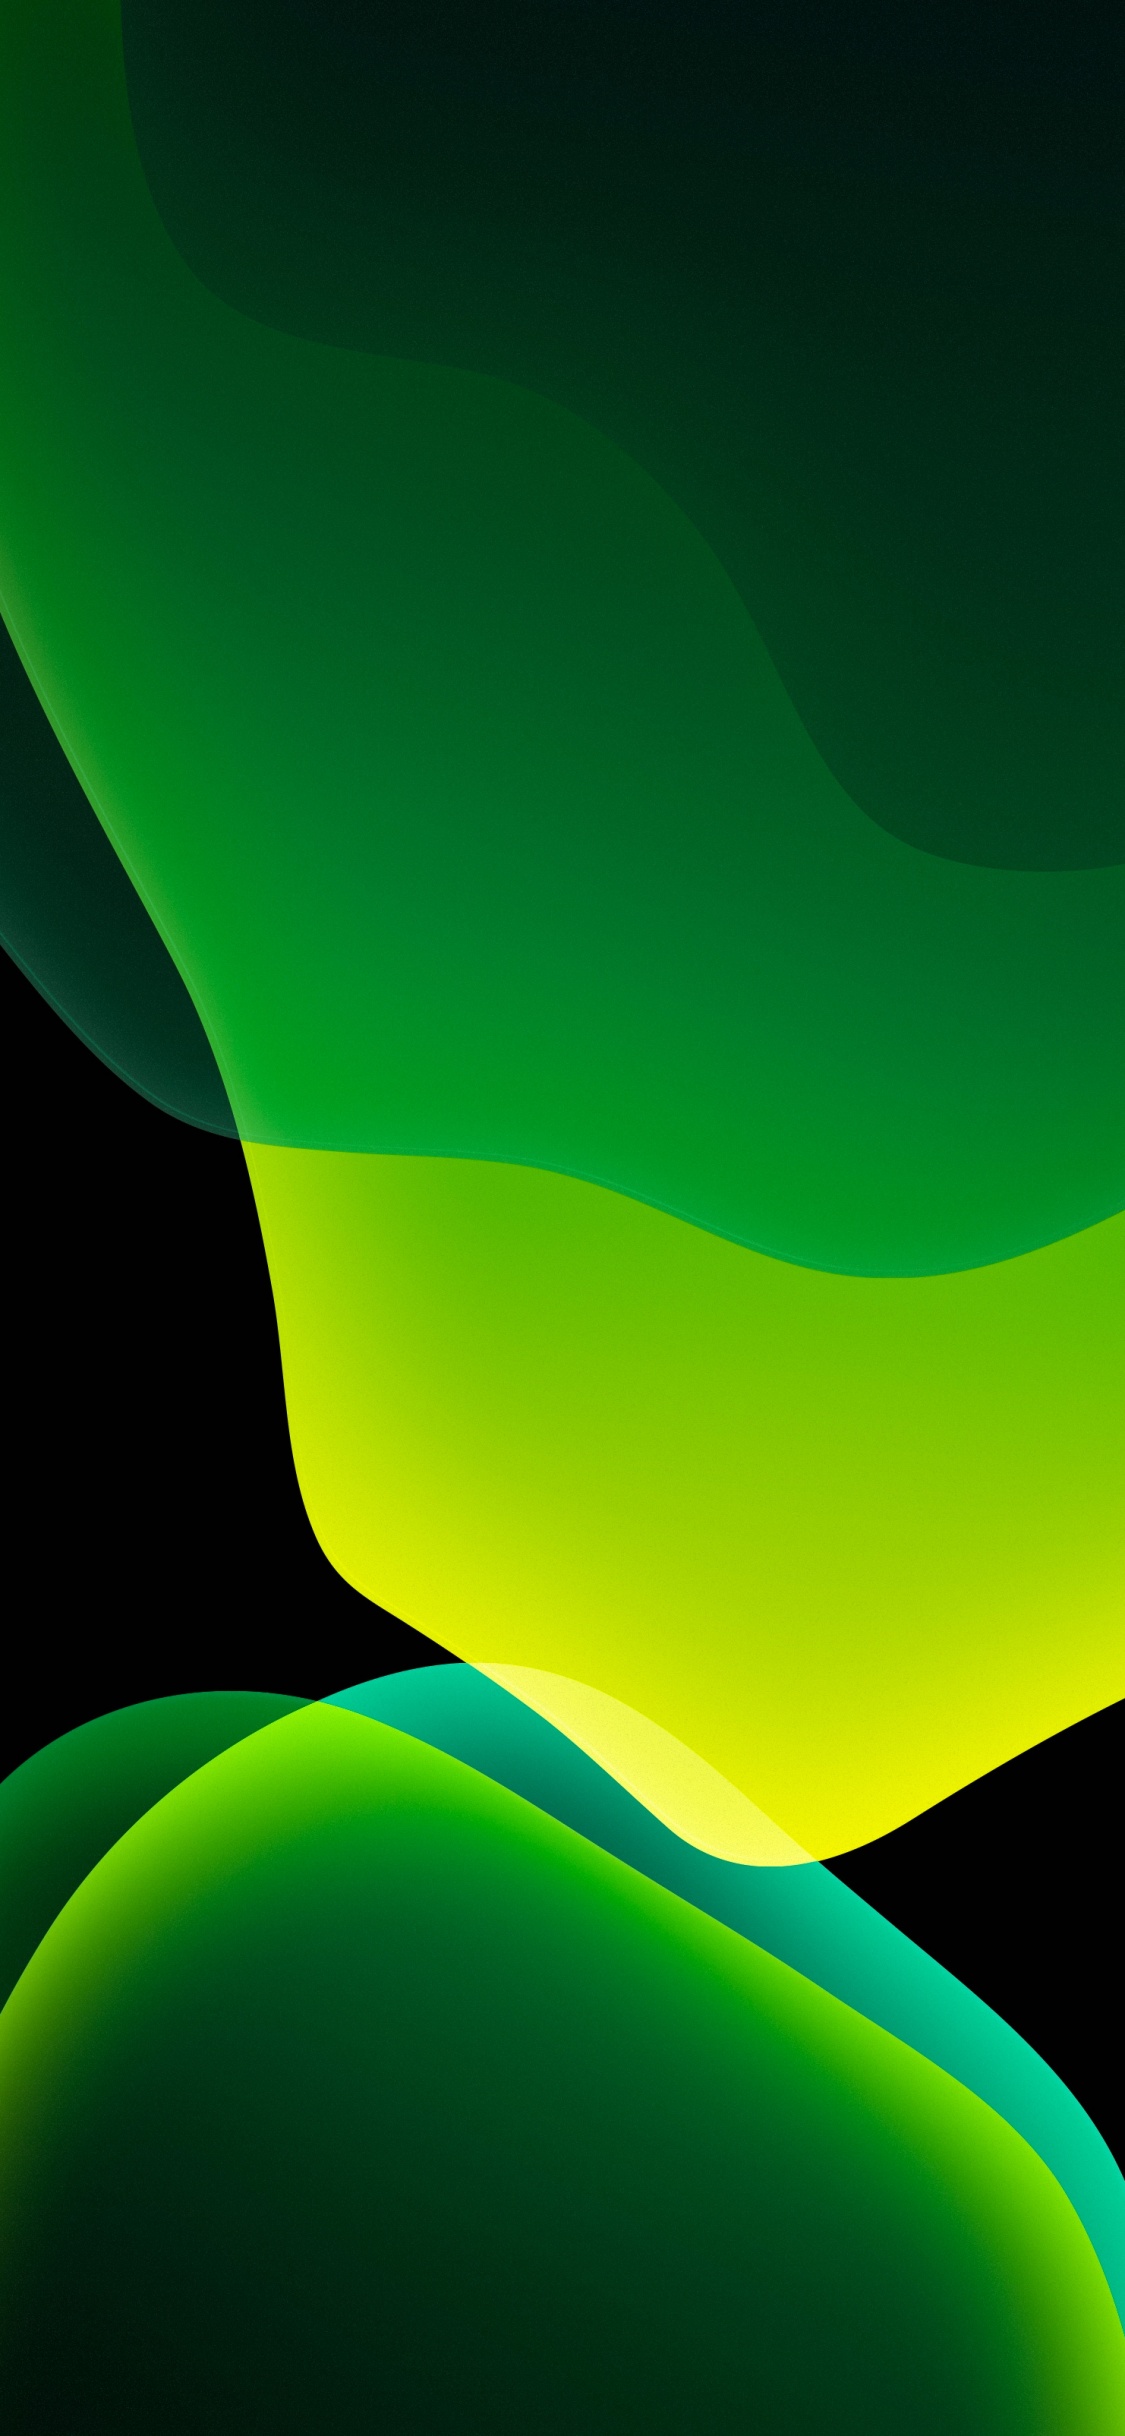 iOS 13 Wallpaper 4K, Stock, iPadOS, Green, Black background, AMOLED, Abstract